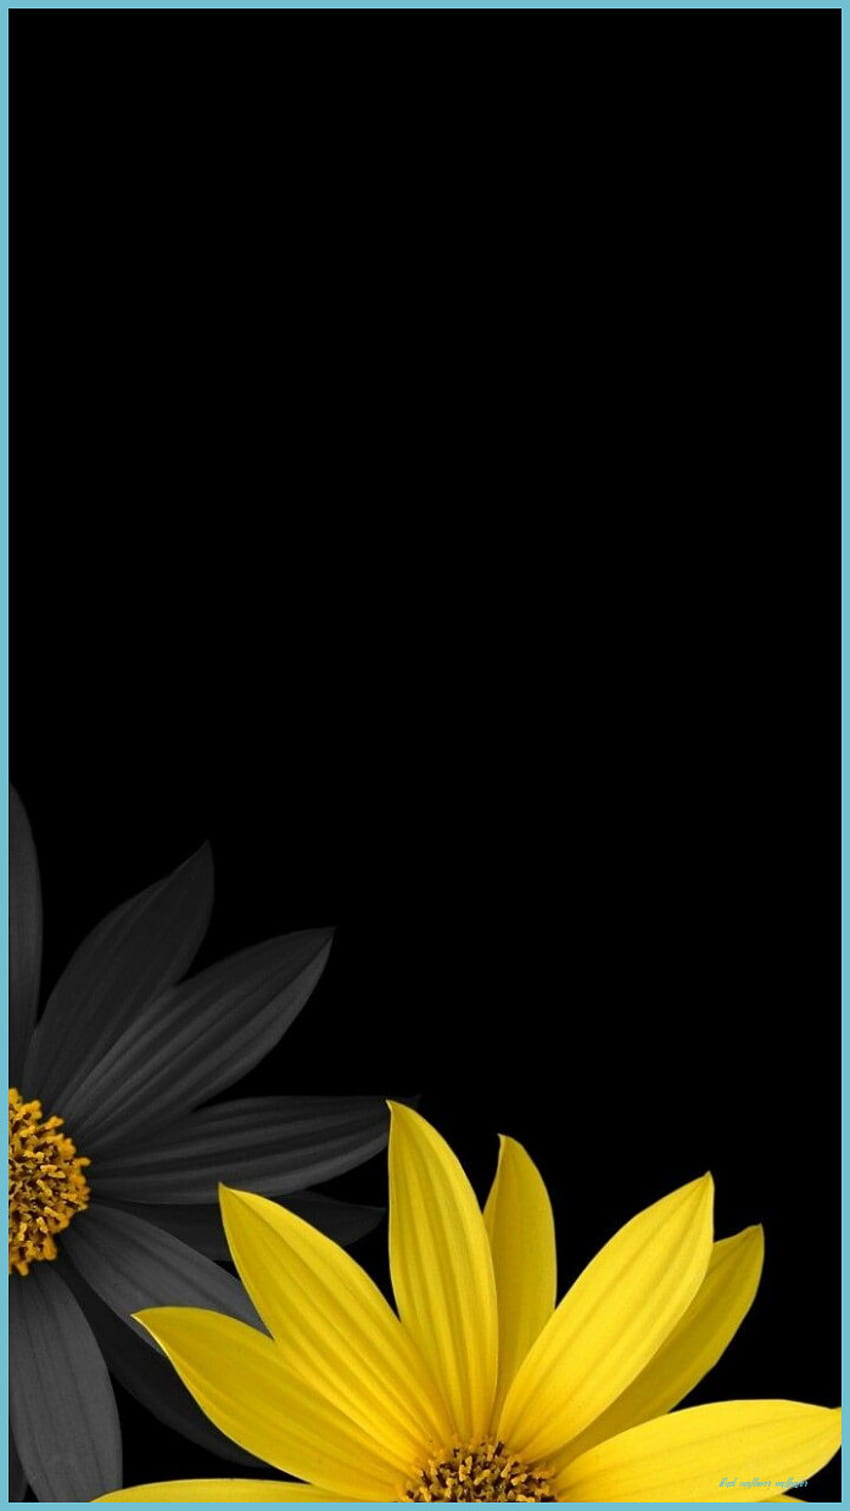 Latar Belakang Bunga Bunga Yang Indah, Bunga Matahari - Bunga Matahari Hitam wallpaper ponsel HD